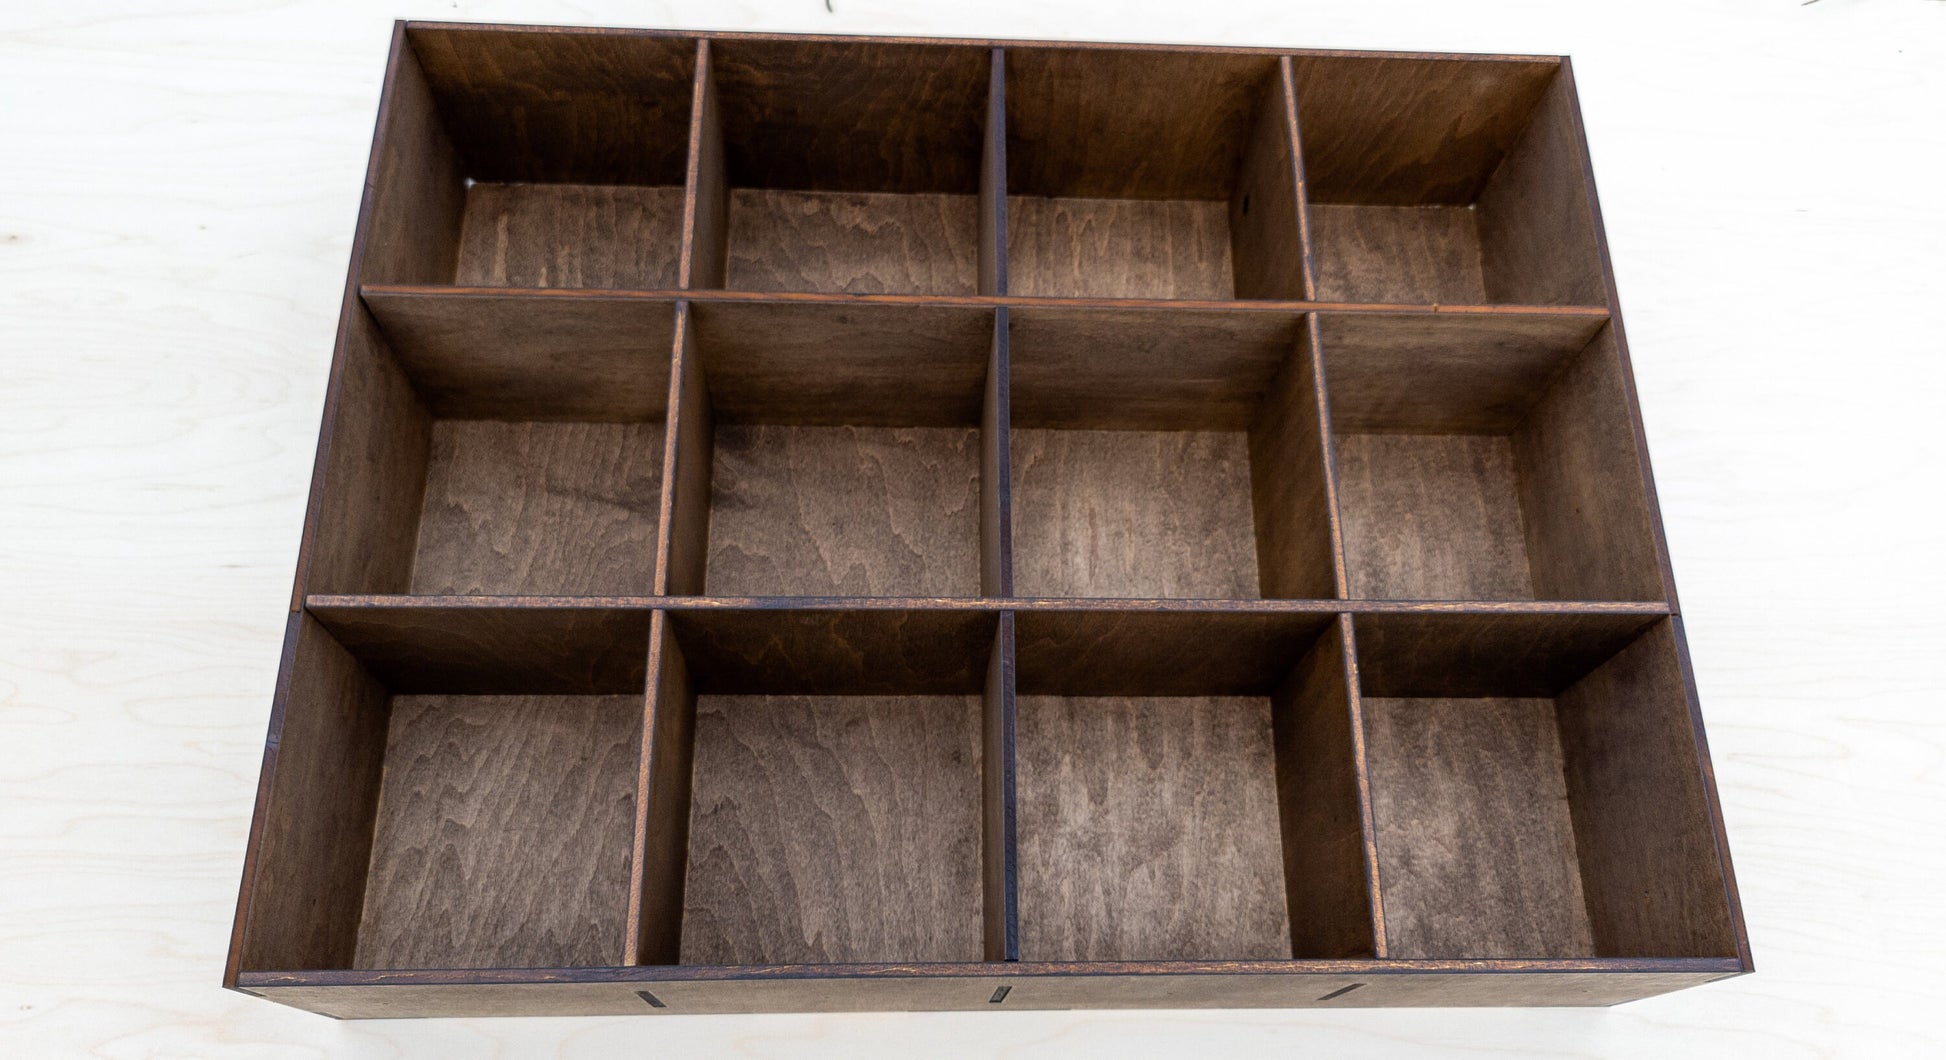 12 Compartment Wooden Display Shelf - Trinket Shelf - Curio Cabinet- Knick Knack Collection Display - Printer Tray -Figure Organizer Display